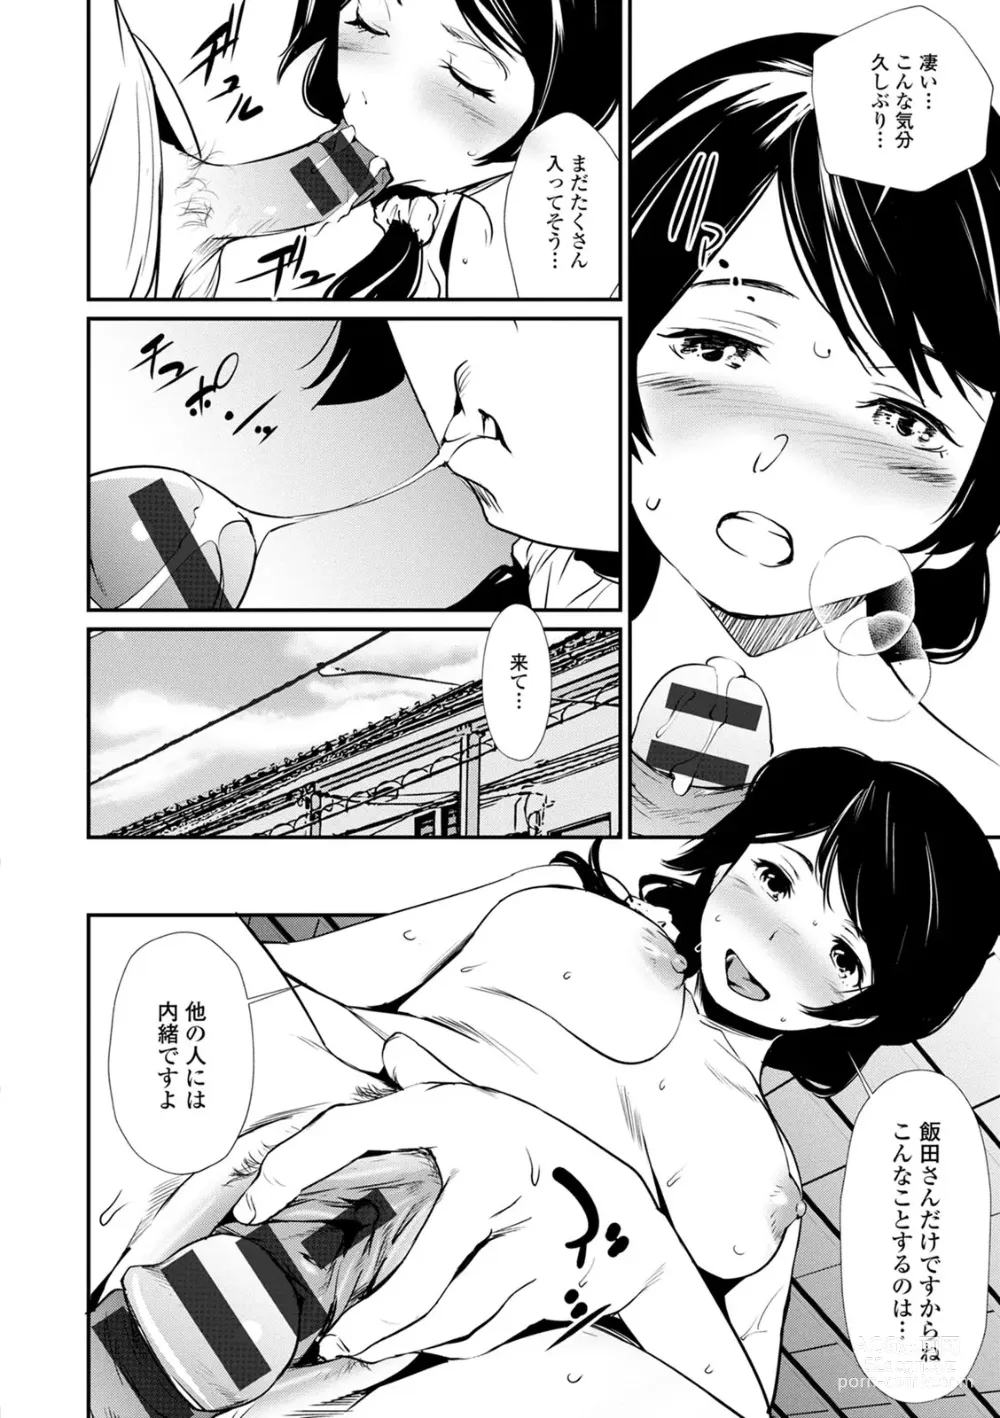 Page 176 of manga Hadaka Asobi